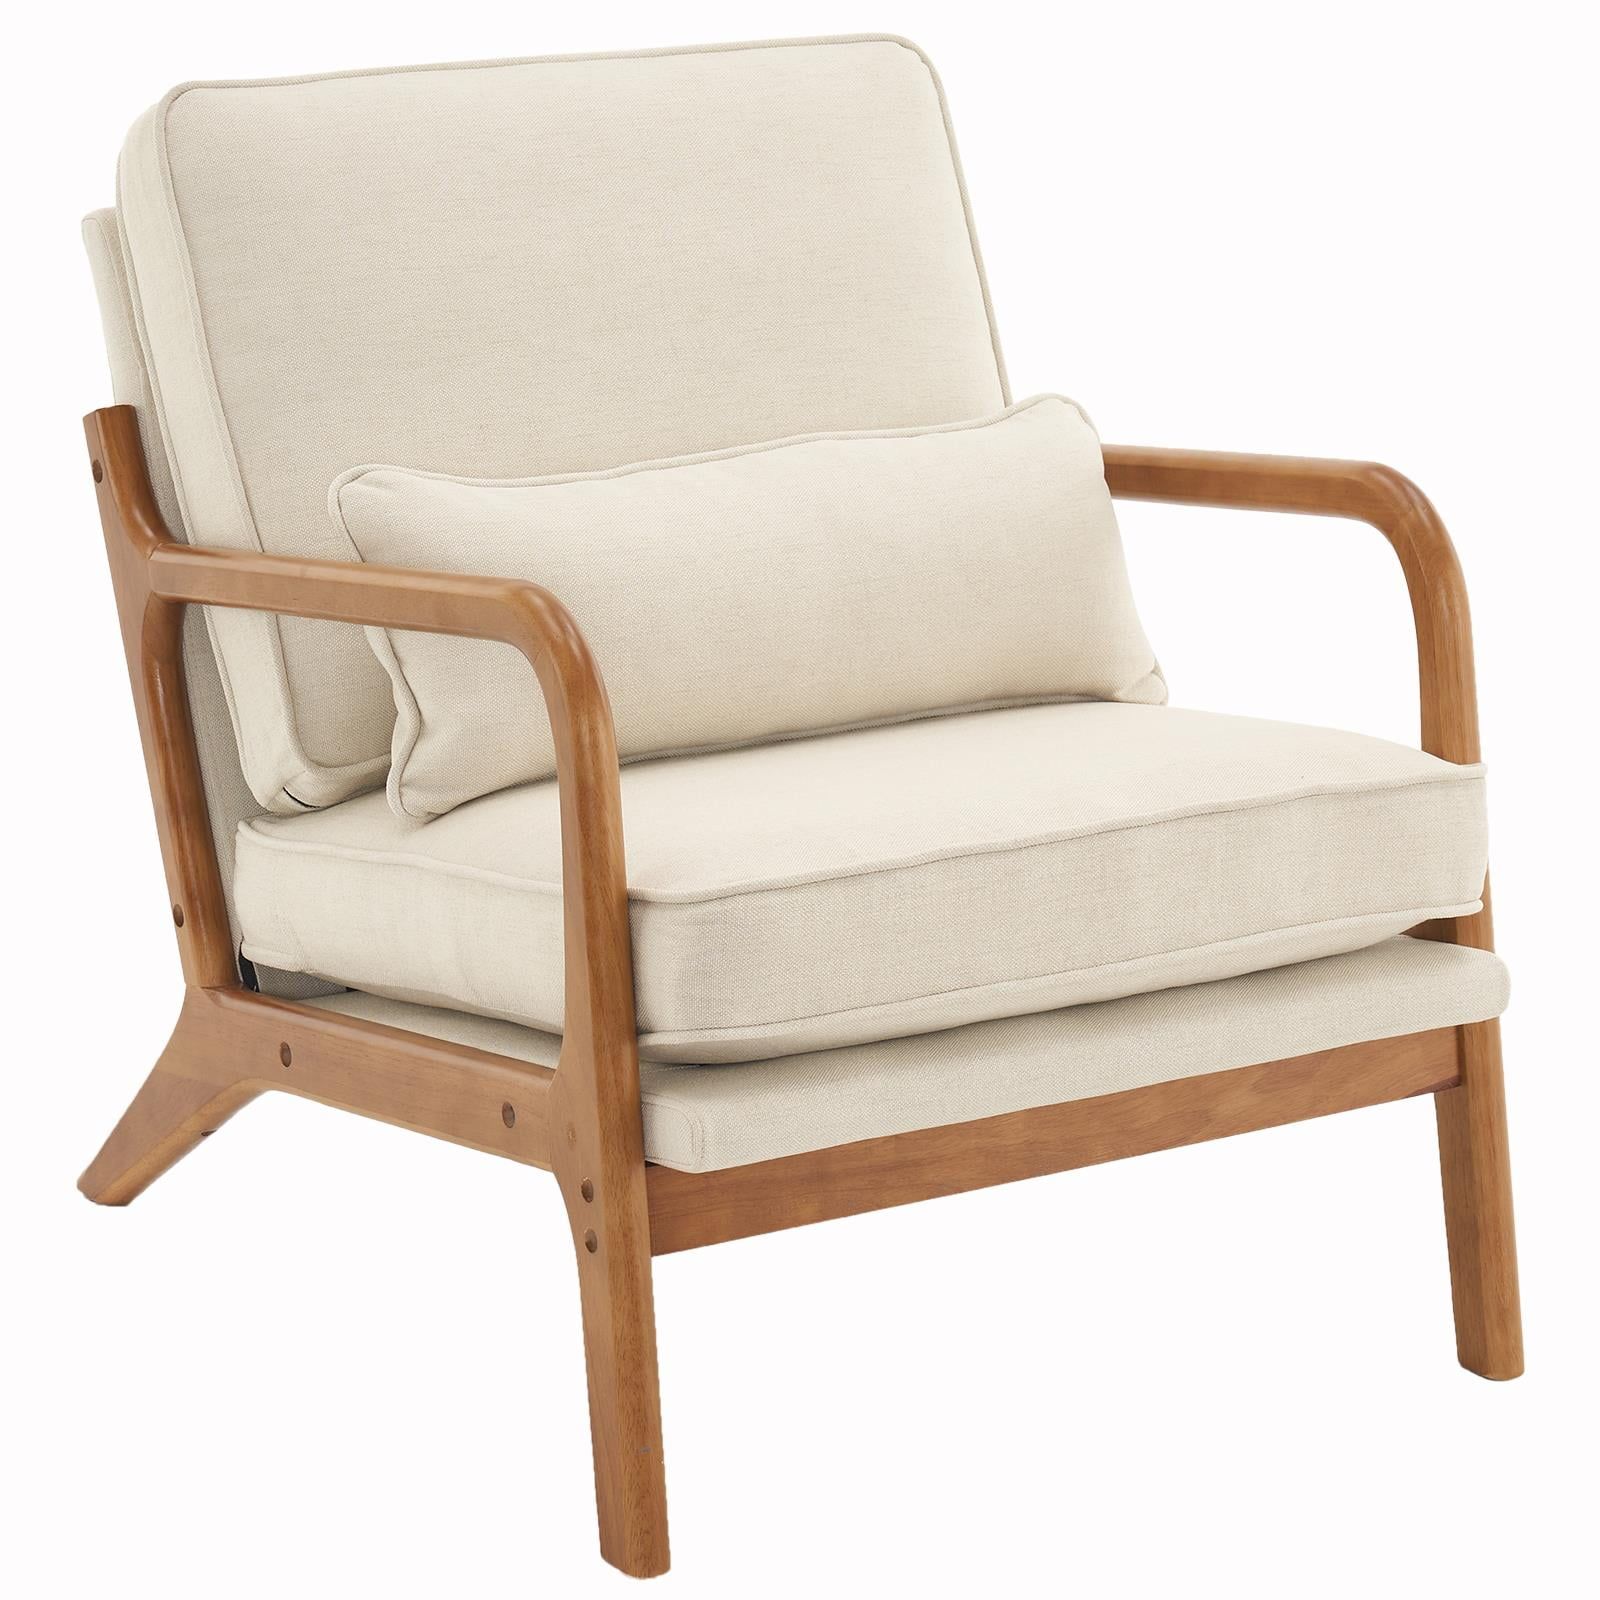 Ktaxon Mid Century Modern Accent Chair, Linen Fabric Armchair with Solid Wood Frame Beige | Walmart (US)